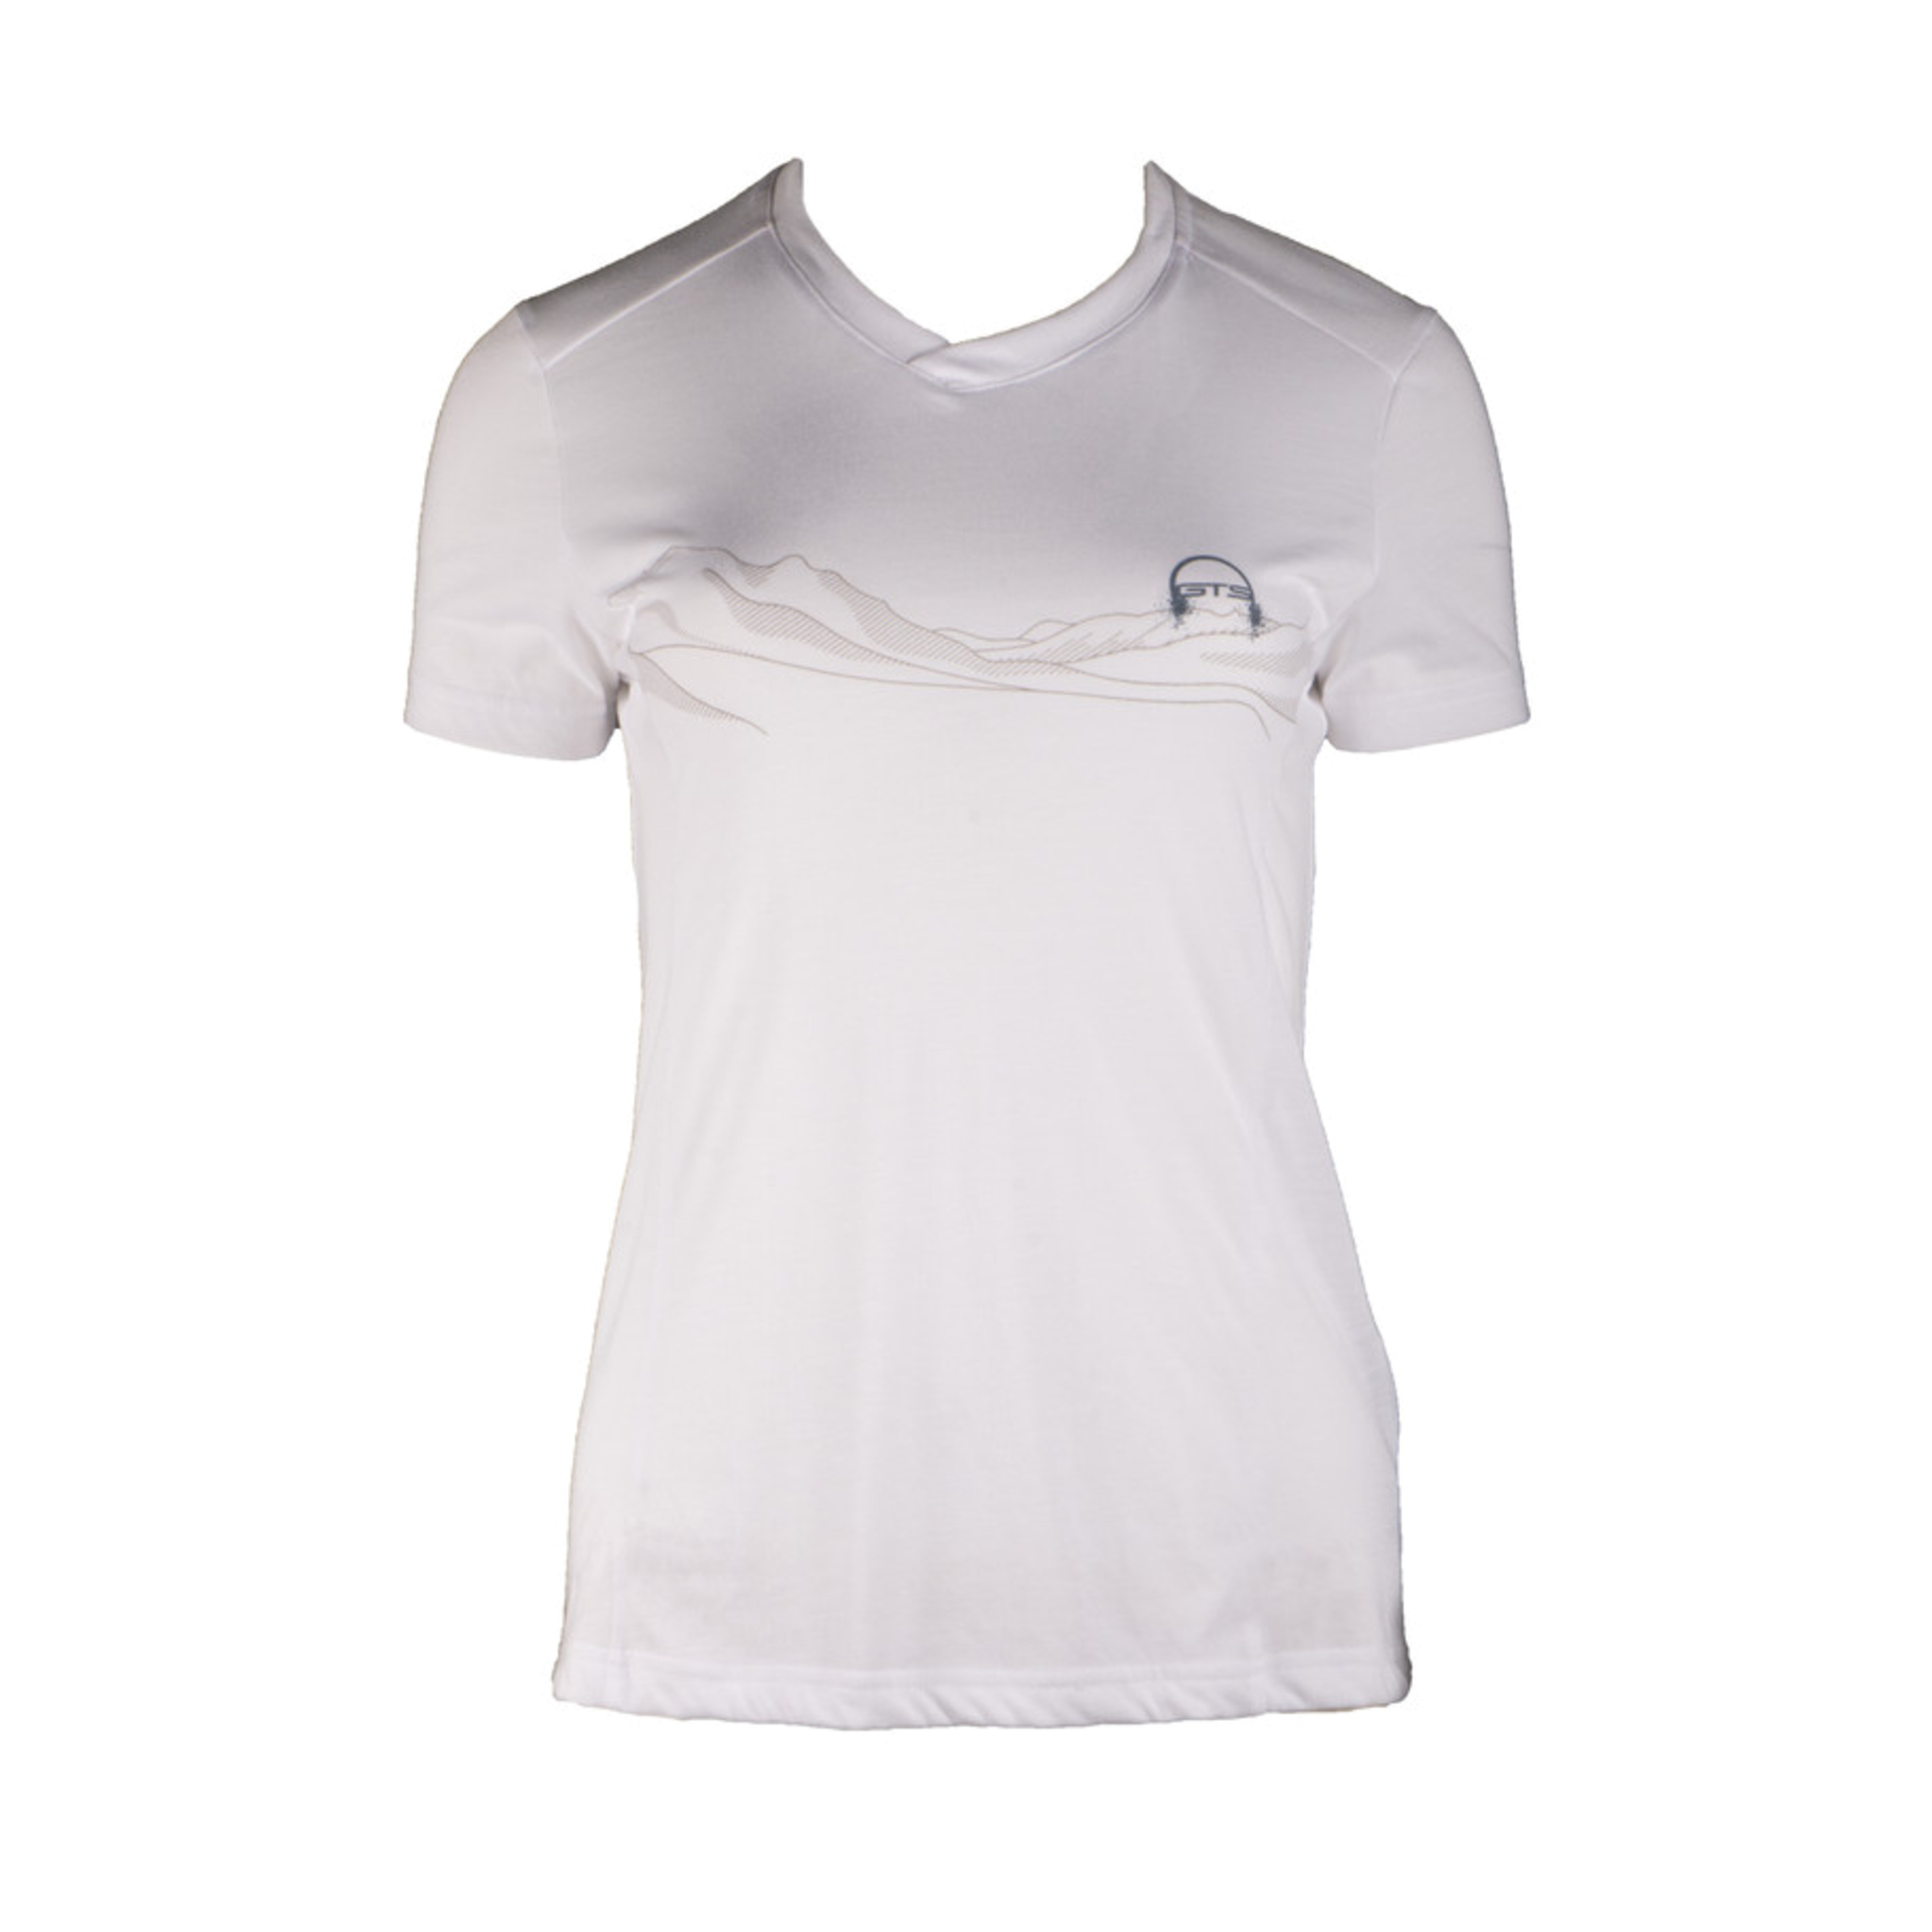 T-shirt Gts 211921l Mulher Extra Macia, Corrida E Caminhada. - Branco | Sport Zone MKP